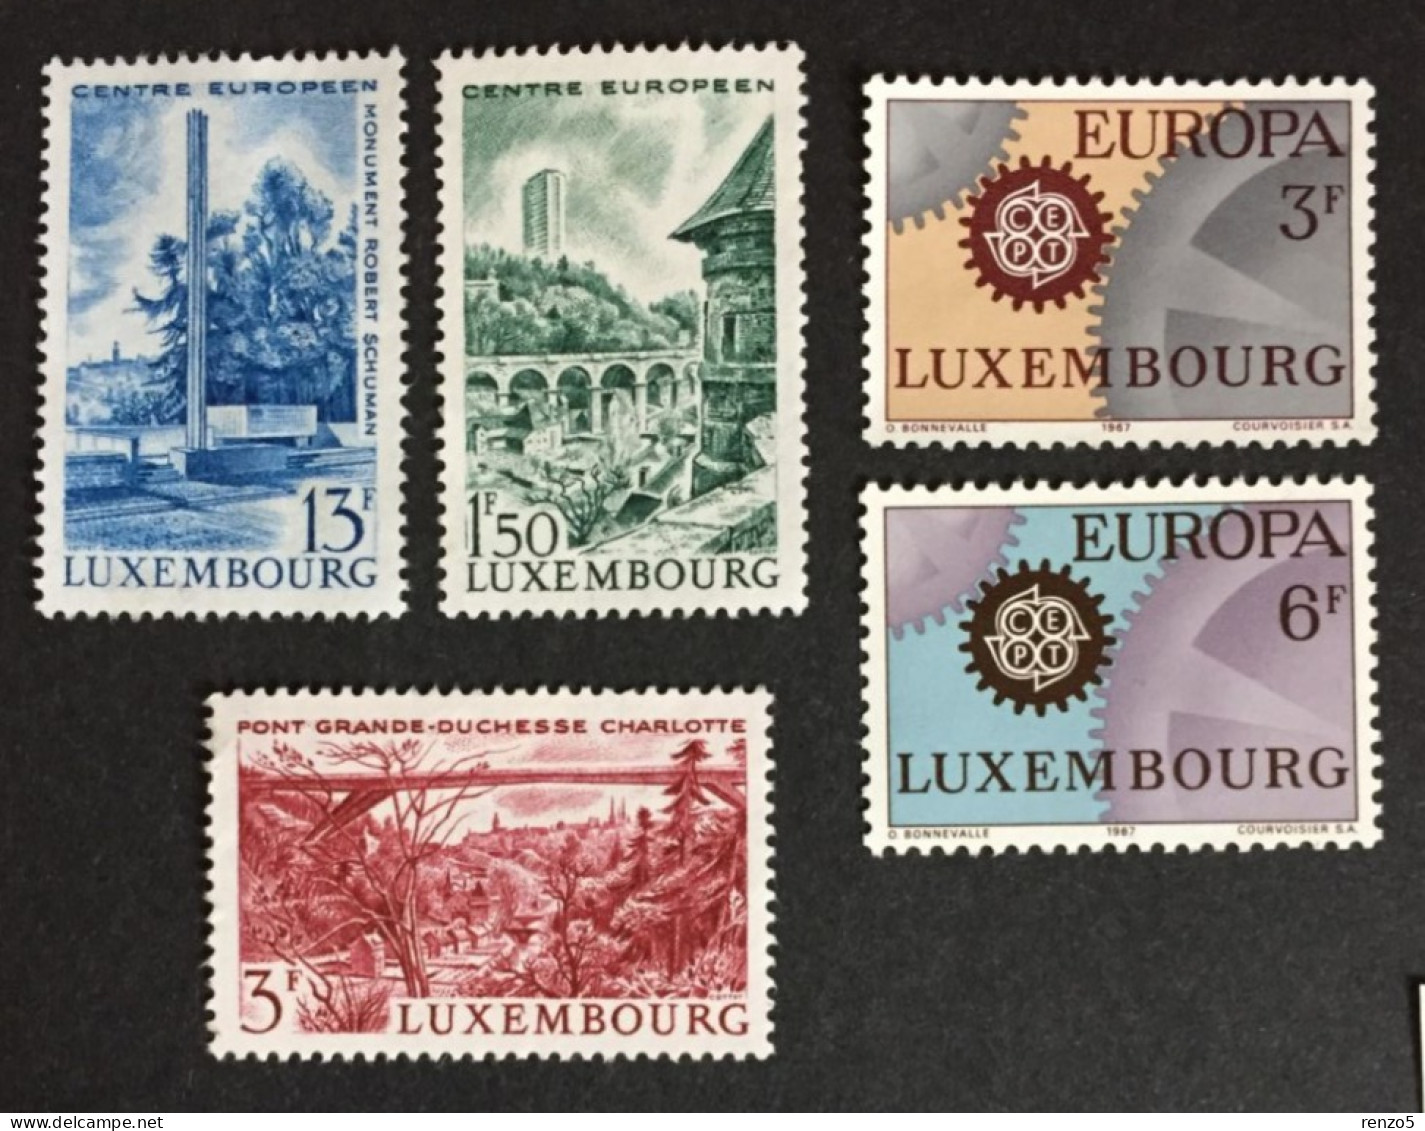 1966 Luxembourg - Tourism Landmarks, Europa CEPT, Lux European Center - Unused ( No Gum ) - Nuevos